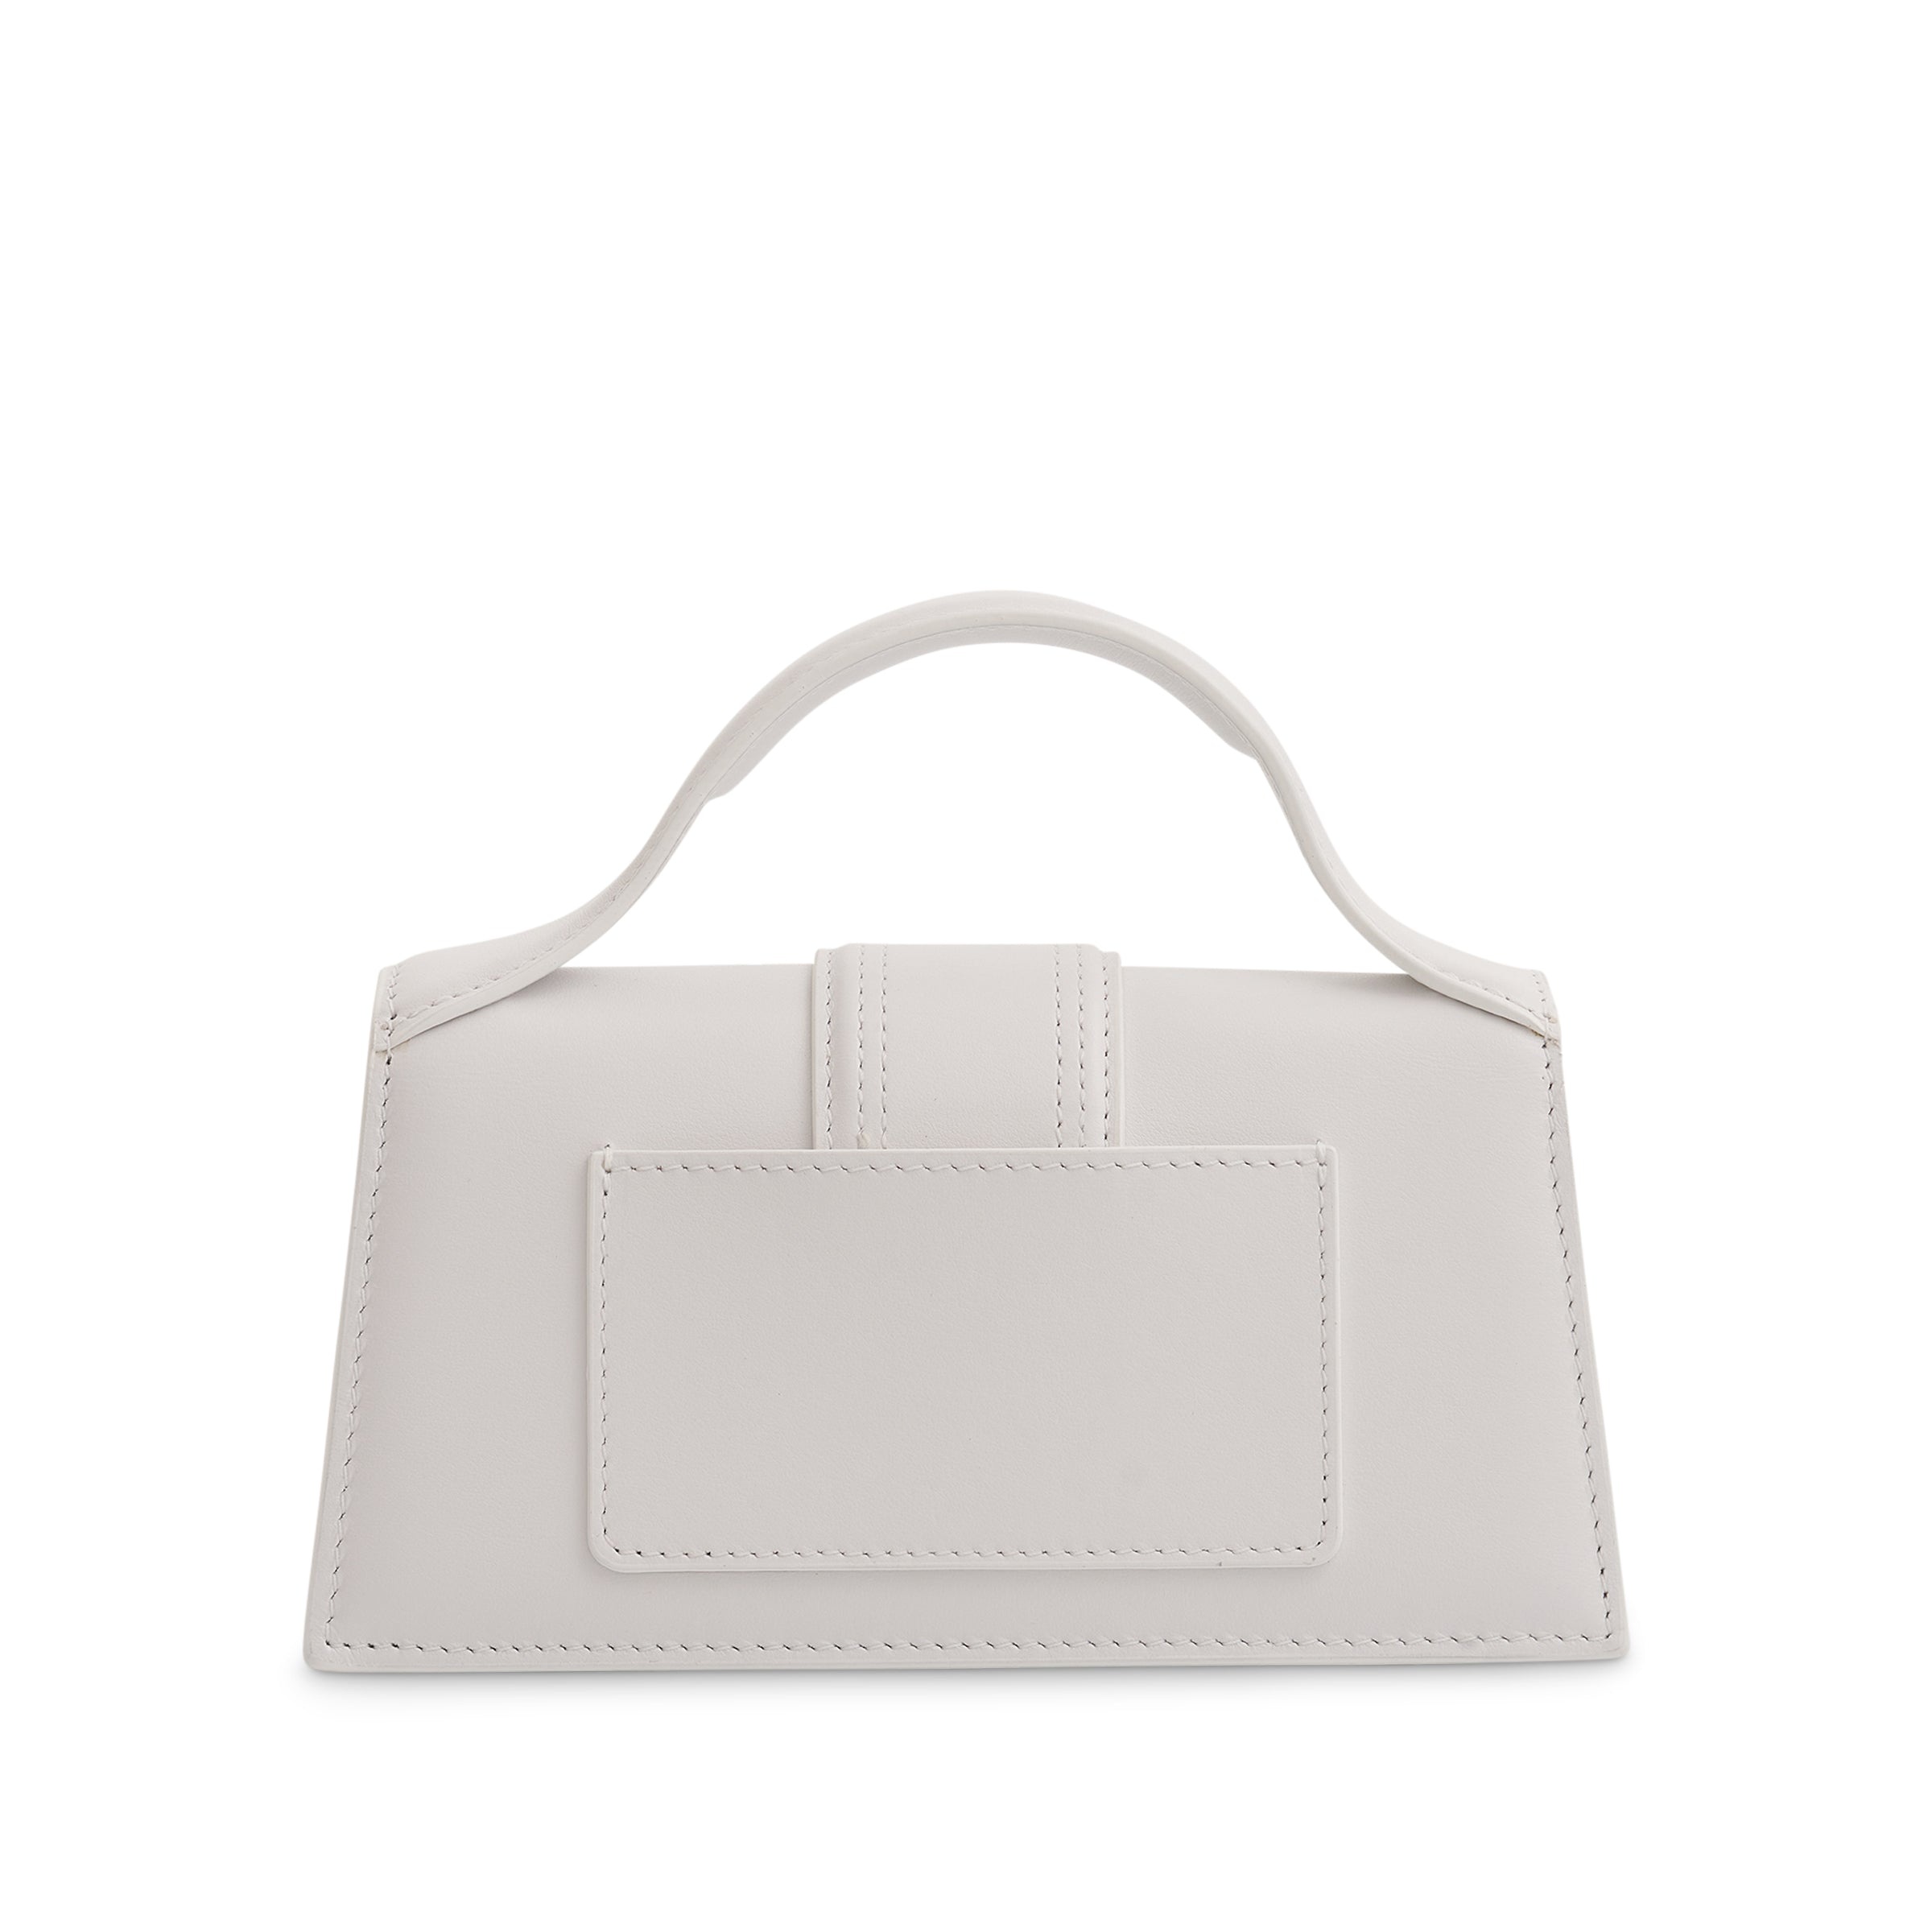 Le Bambino Mini Leather Bag in White - 4